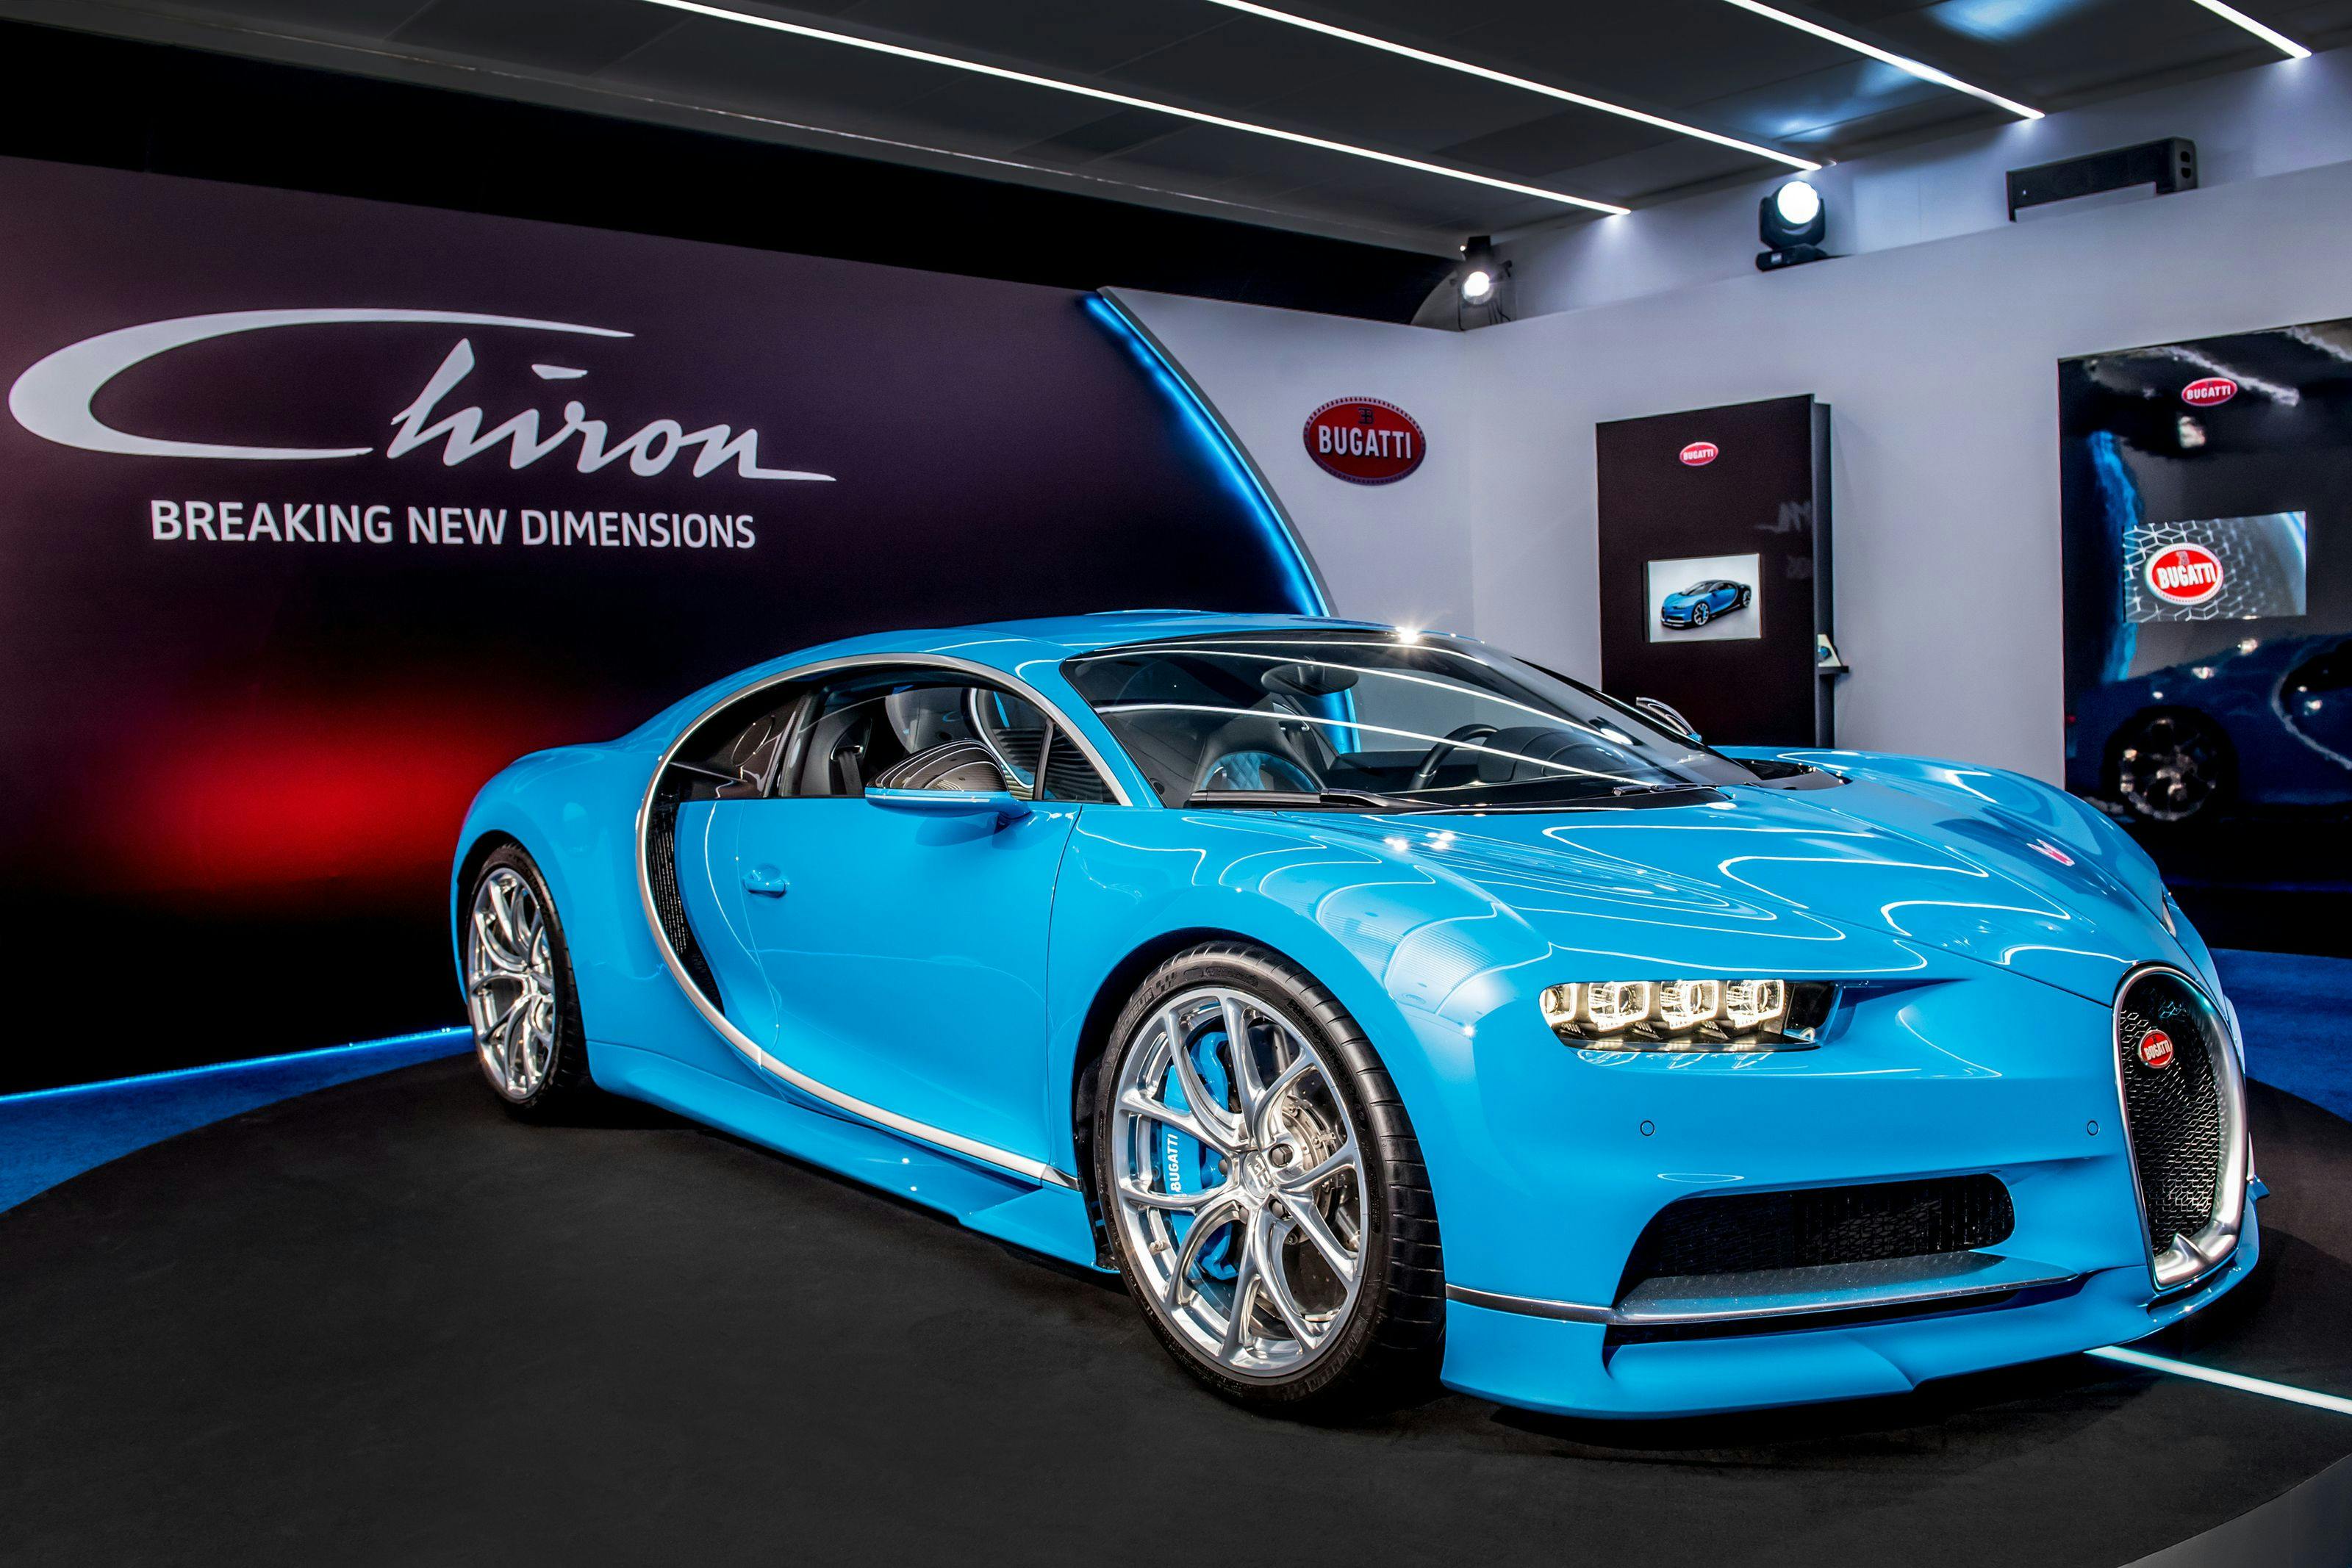 Bugatti celebrates premiere of the Chiron in South-East Asia